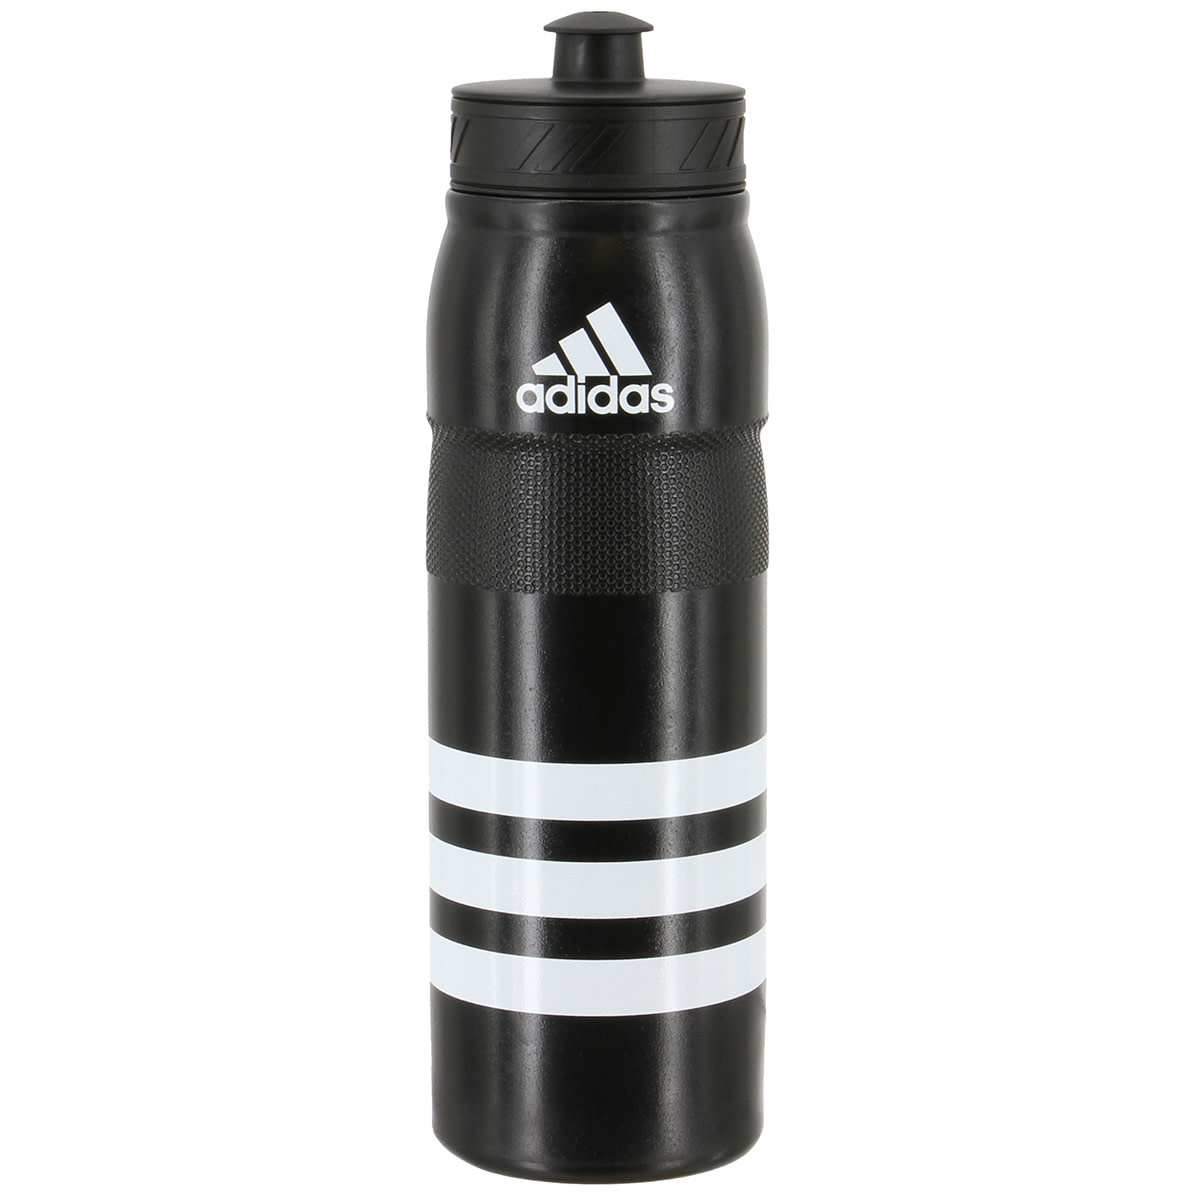 Adidas Stadium Plastic Water Bottle - White/Black